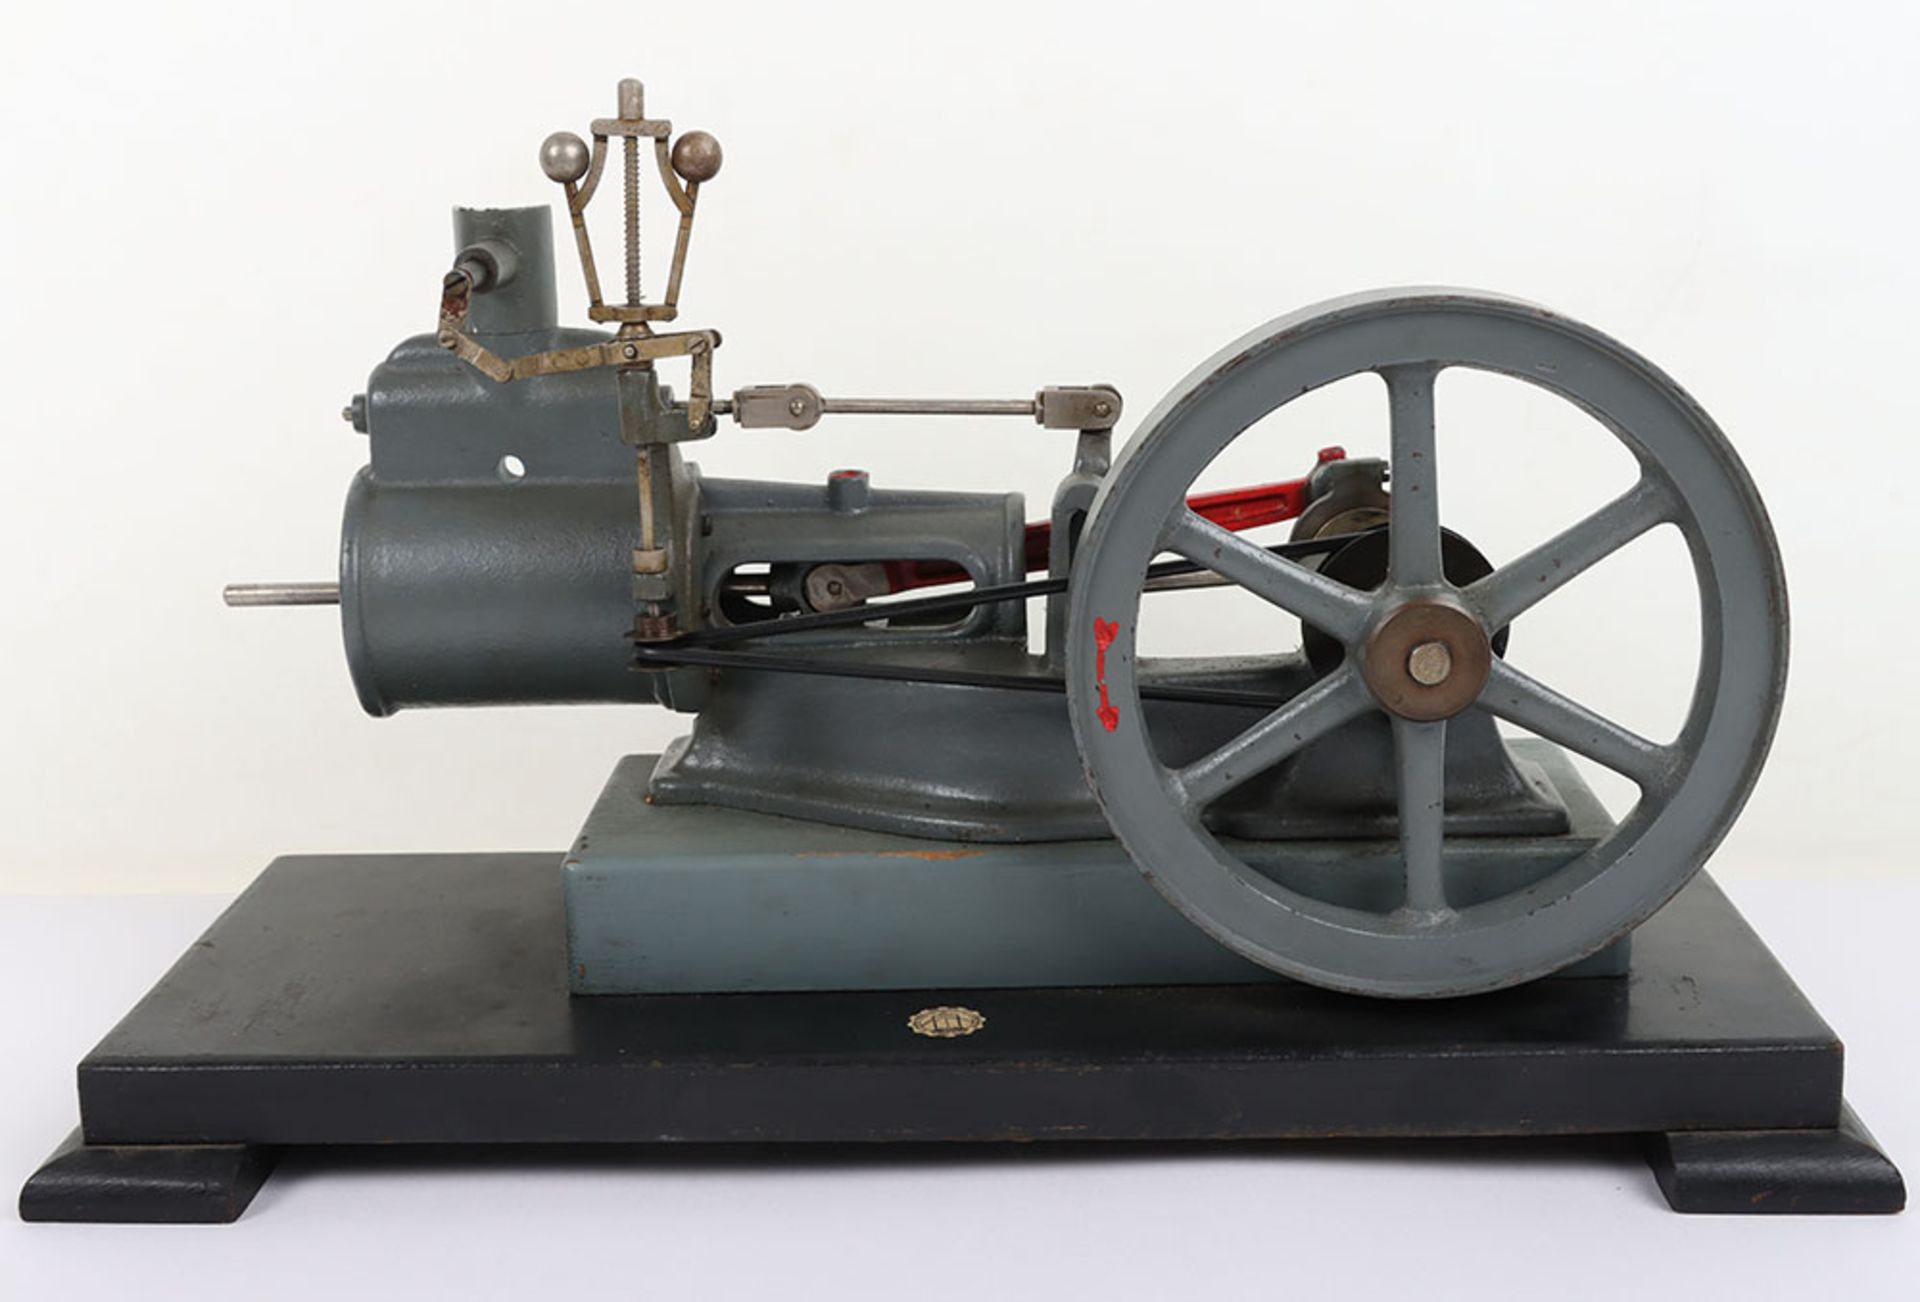 A cut-away demonstration model of a horizontal steam engine